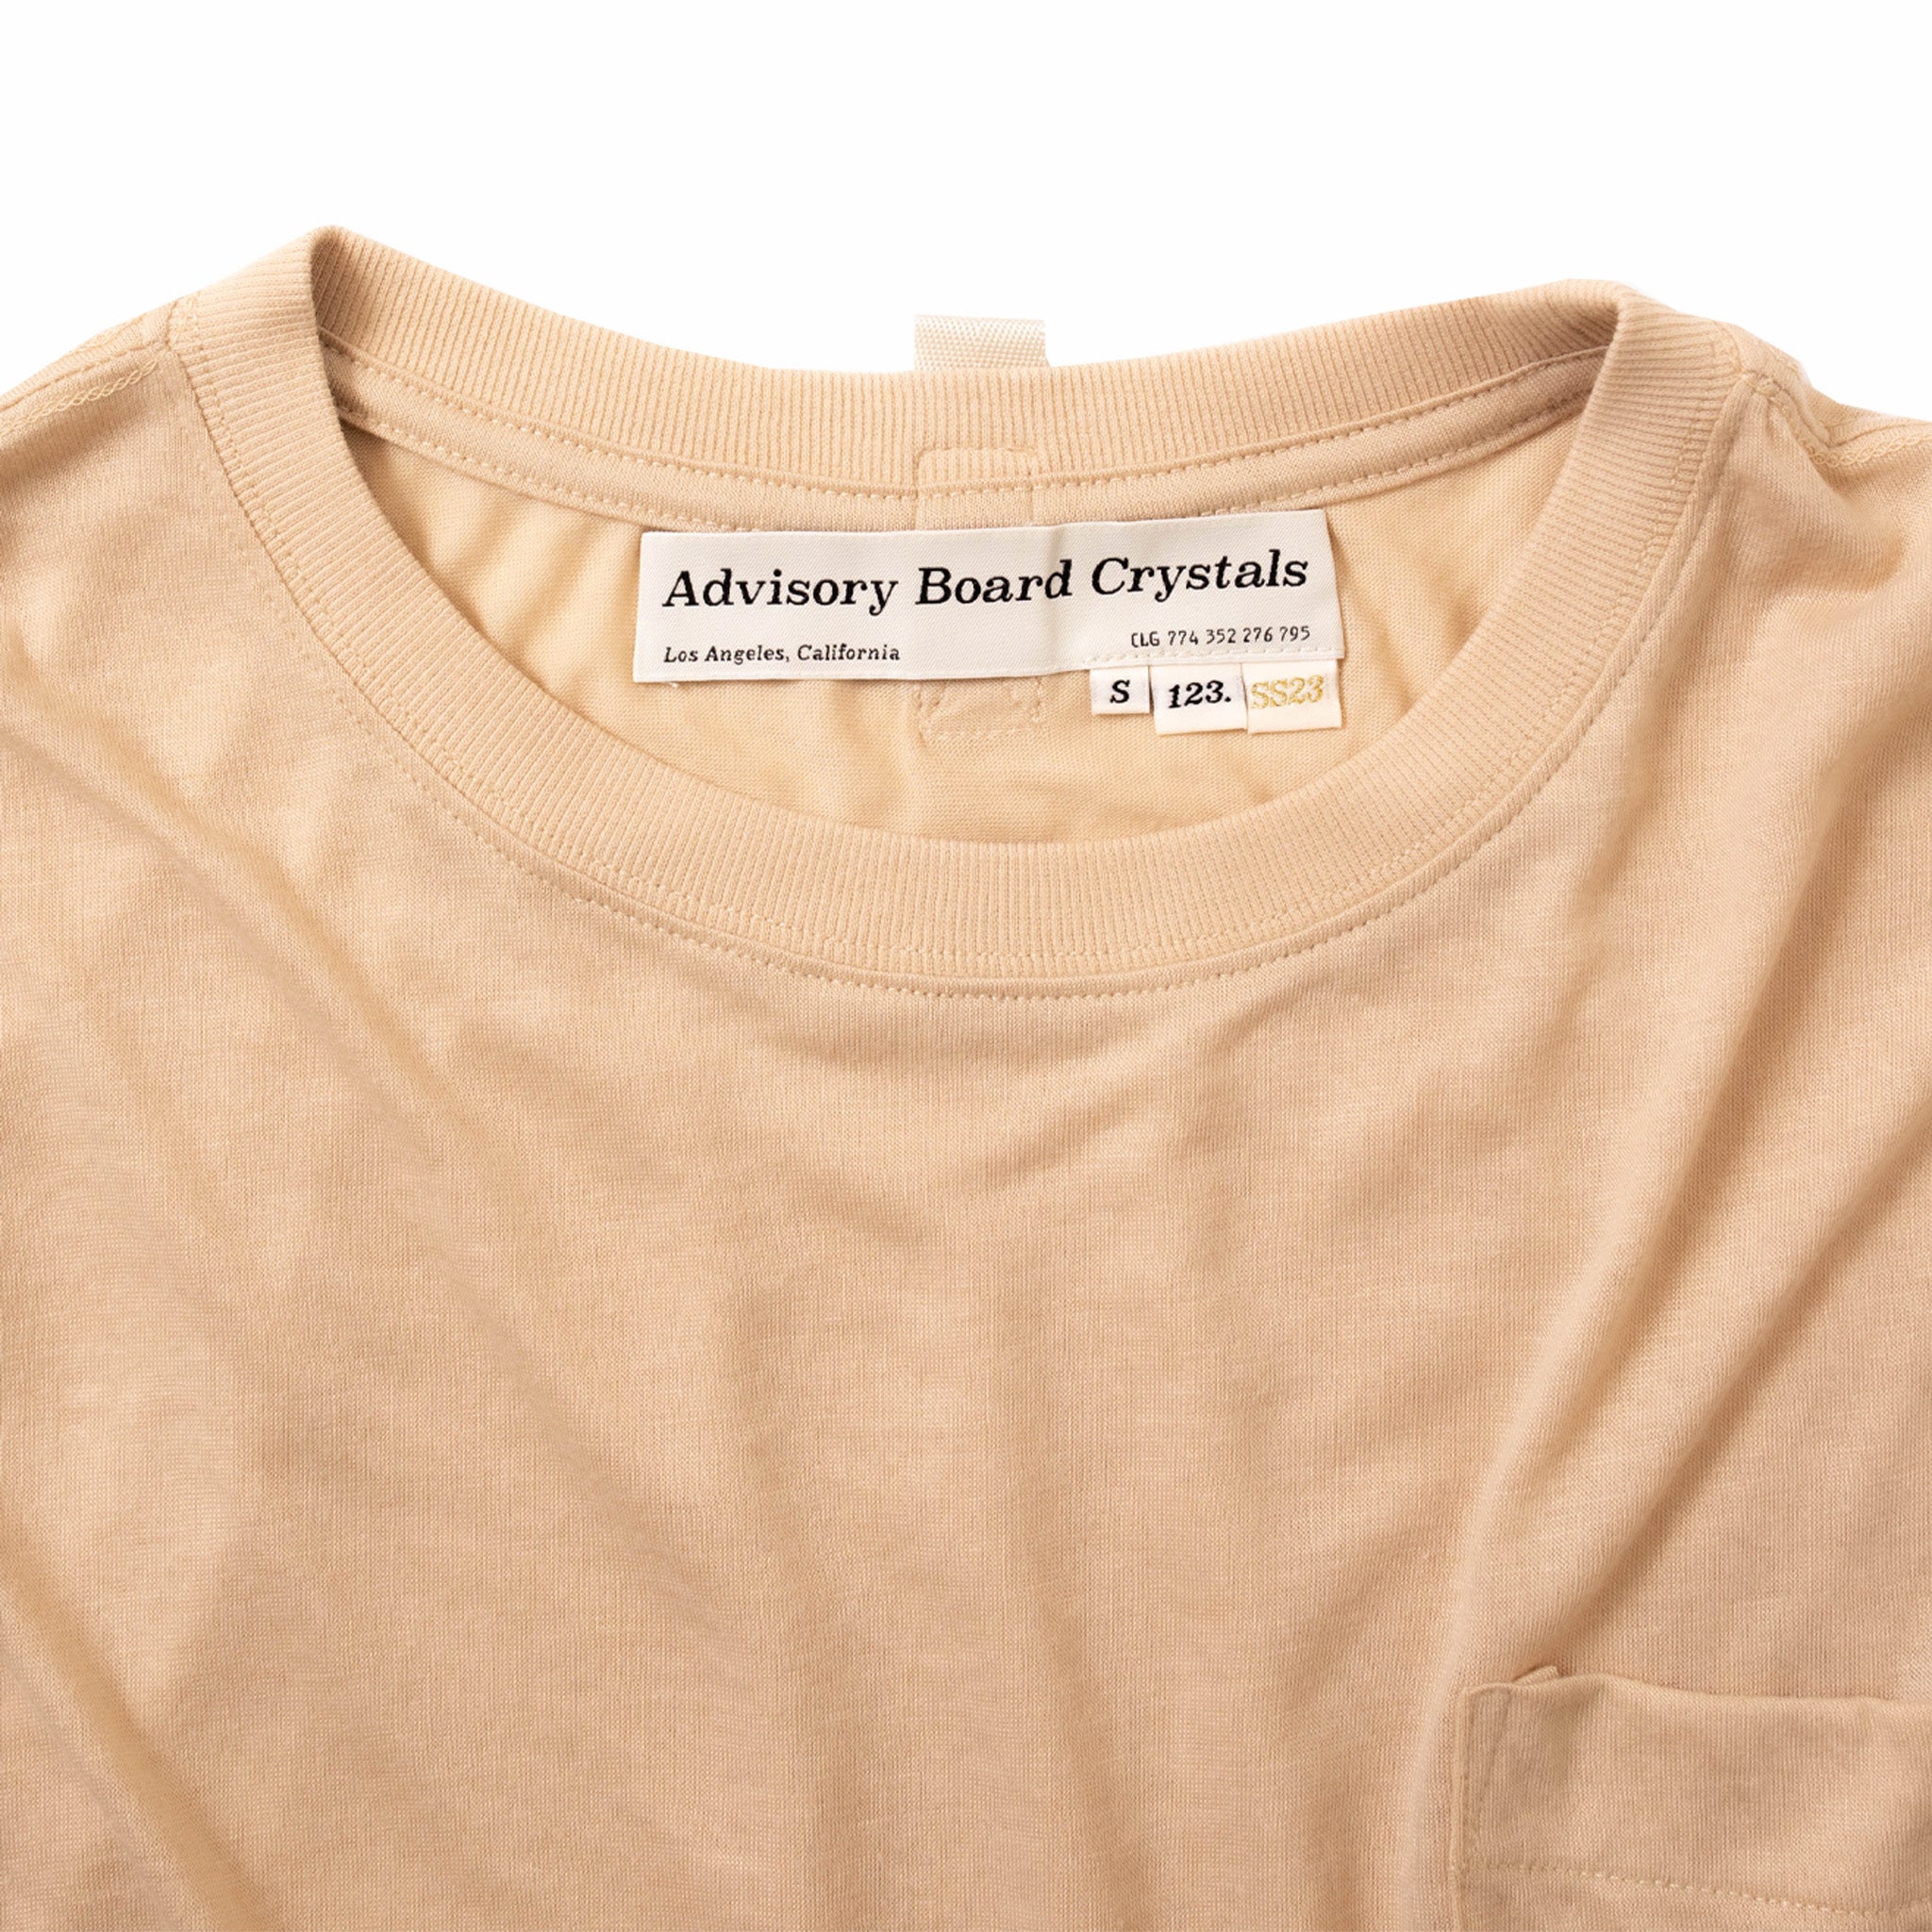 Advisory Board Crystals, Shirts